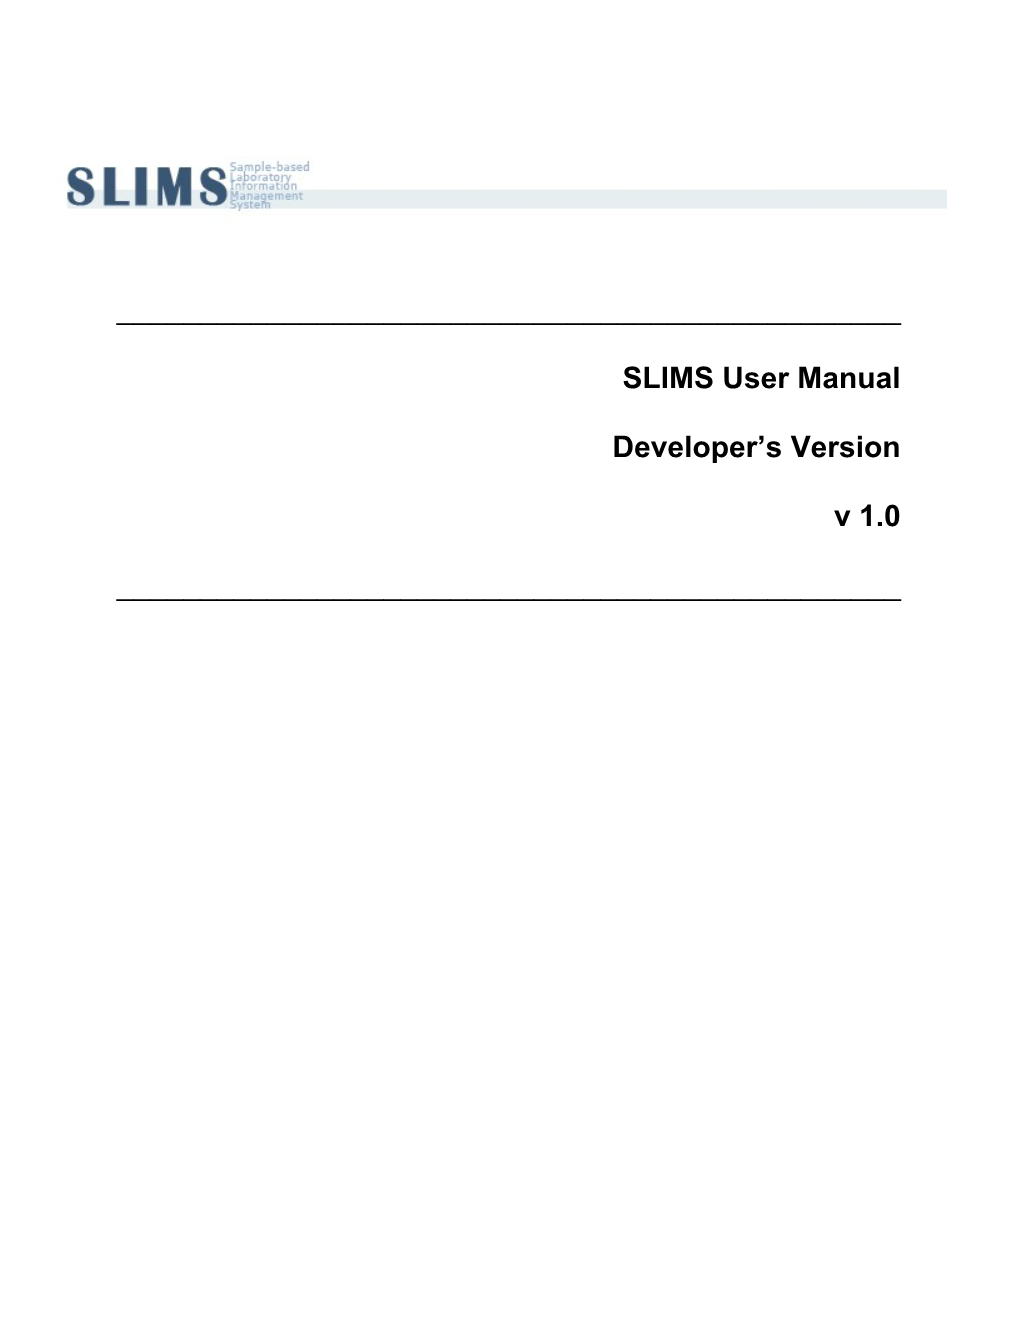 SIMS User Manual V1